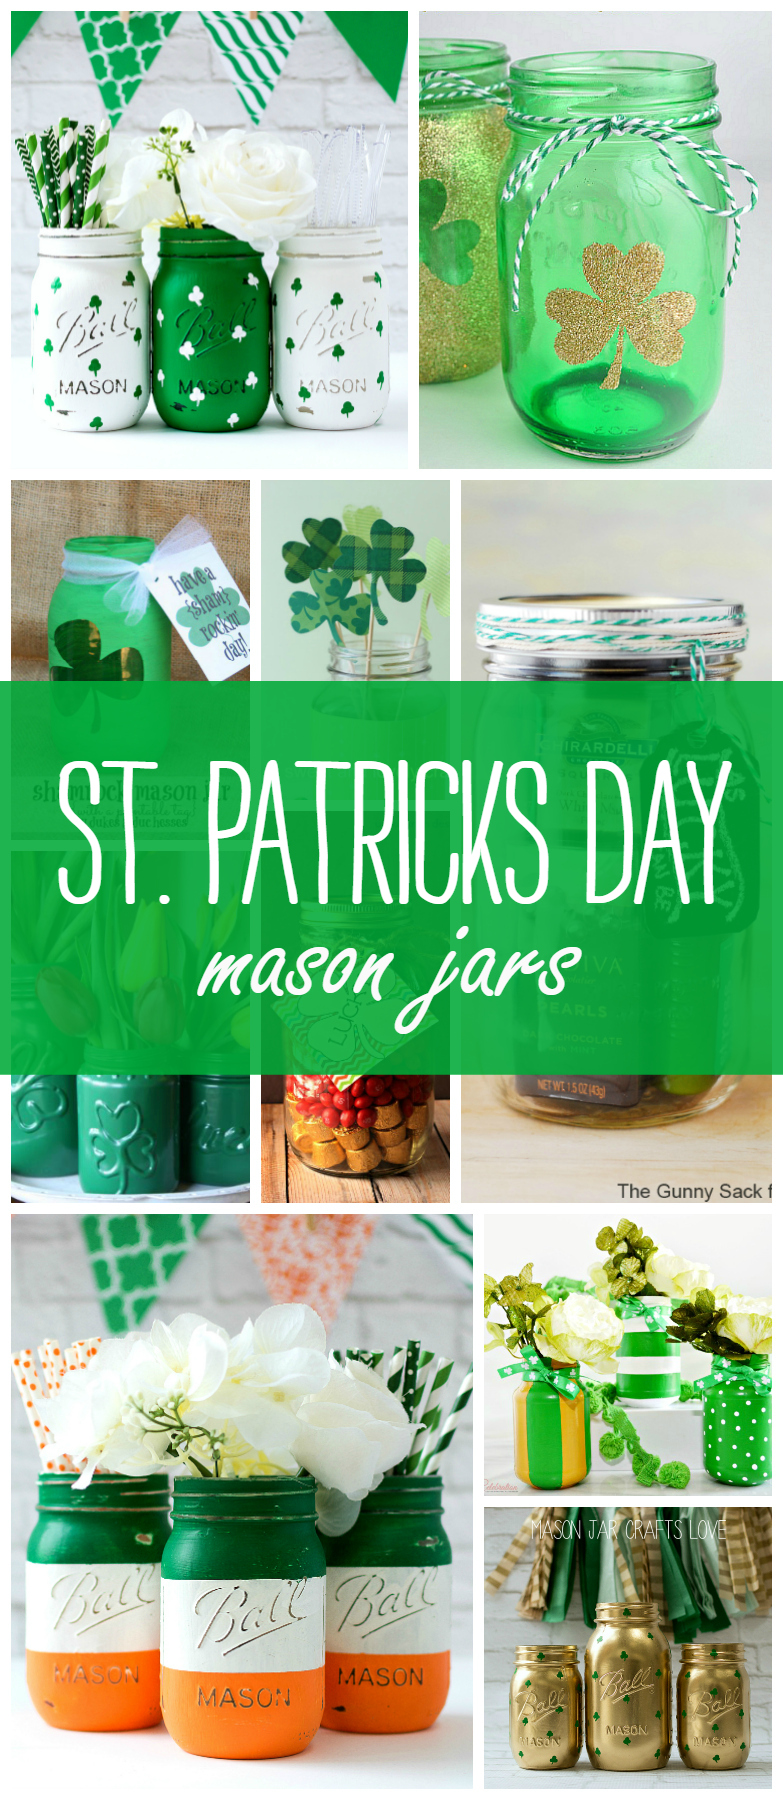 St. Patrick's Day Craft Ideas with Mason Jars